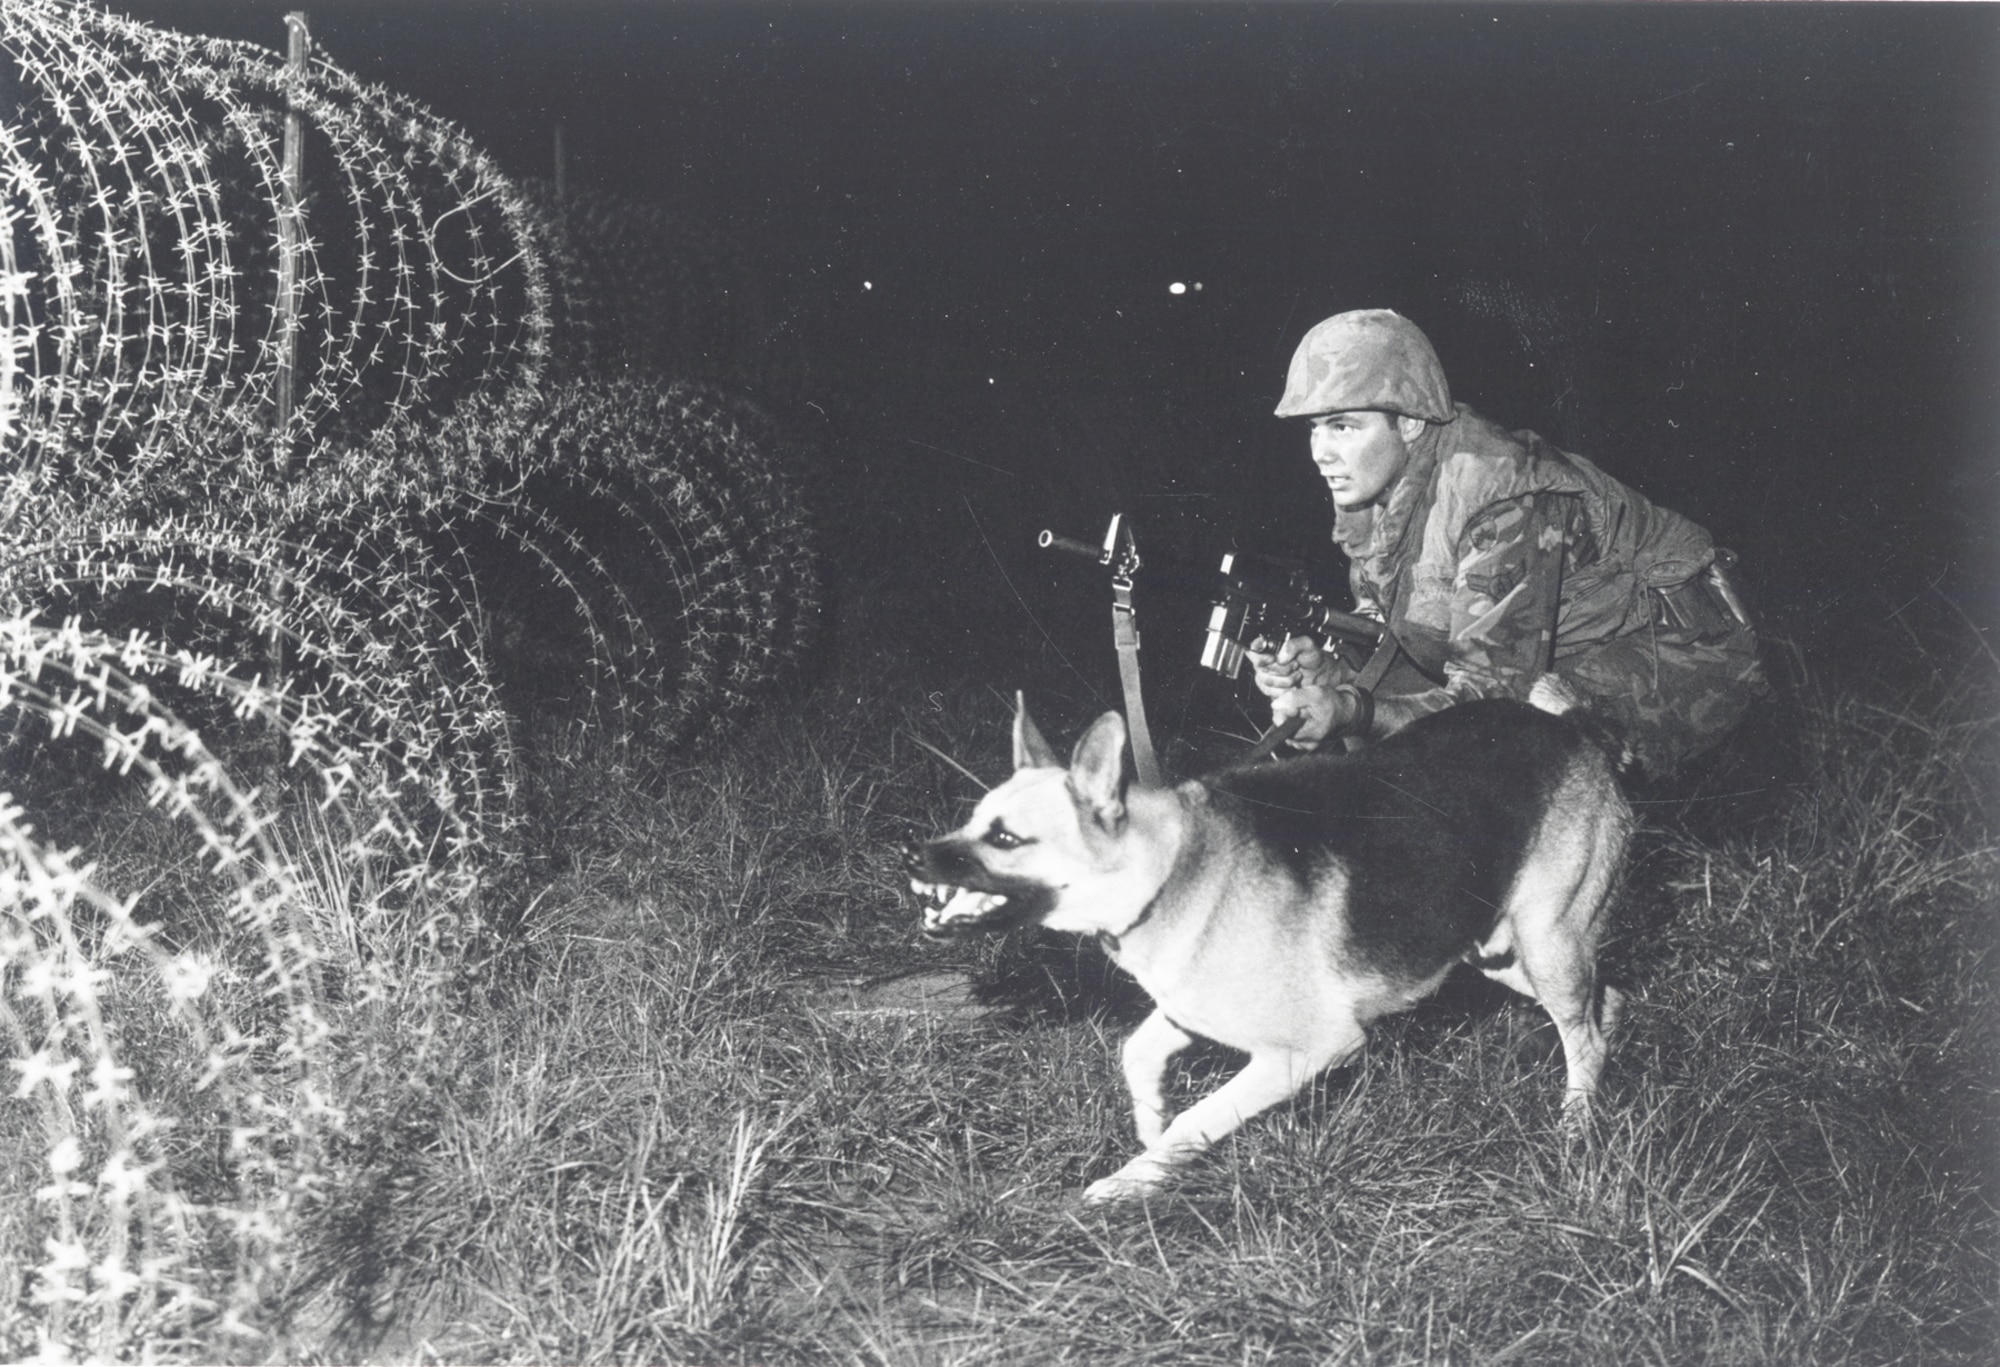 Sentry dog alerts to movement outside the perimeter of Phan Rang Air Base. (U.S. Air Force photo).